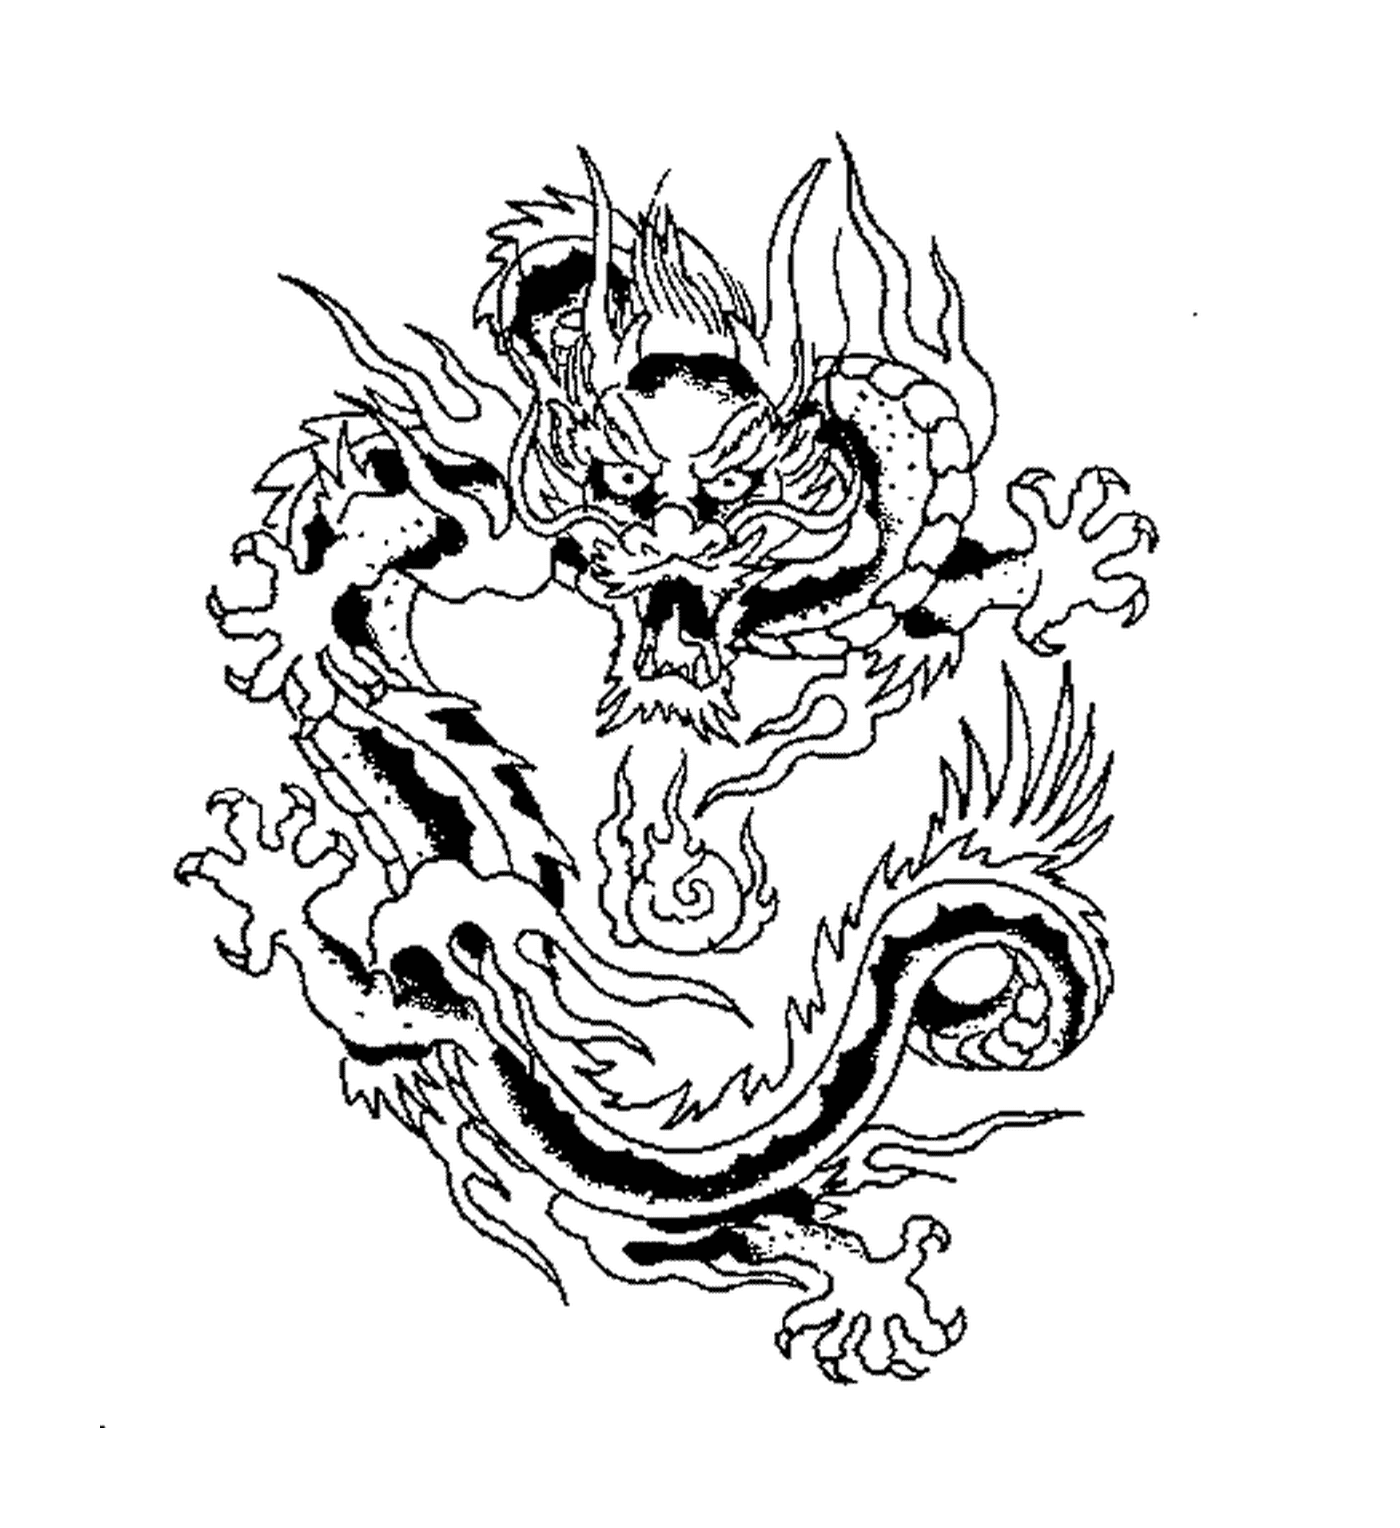  Chinese-inspired dragon tattoo design 